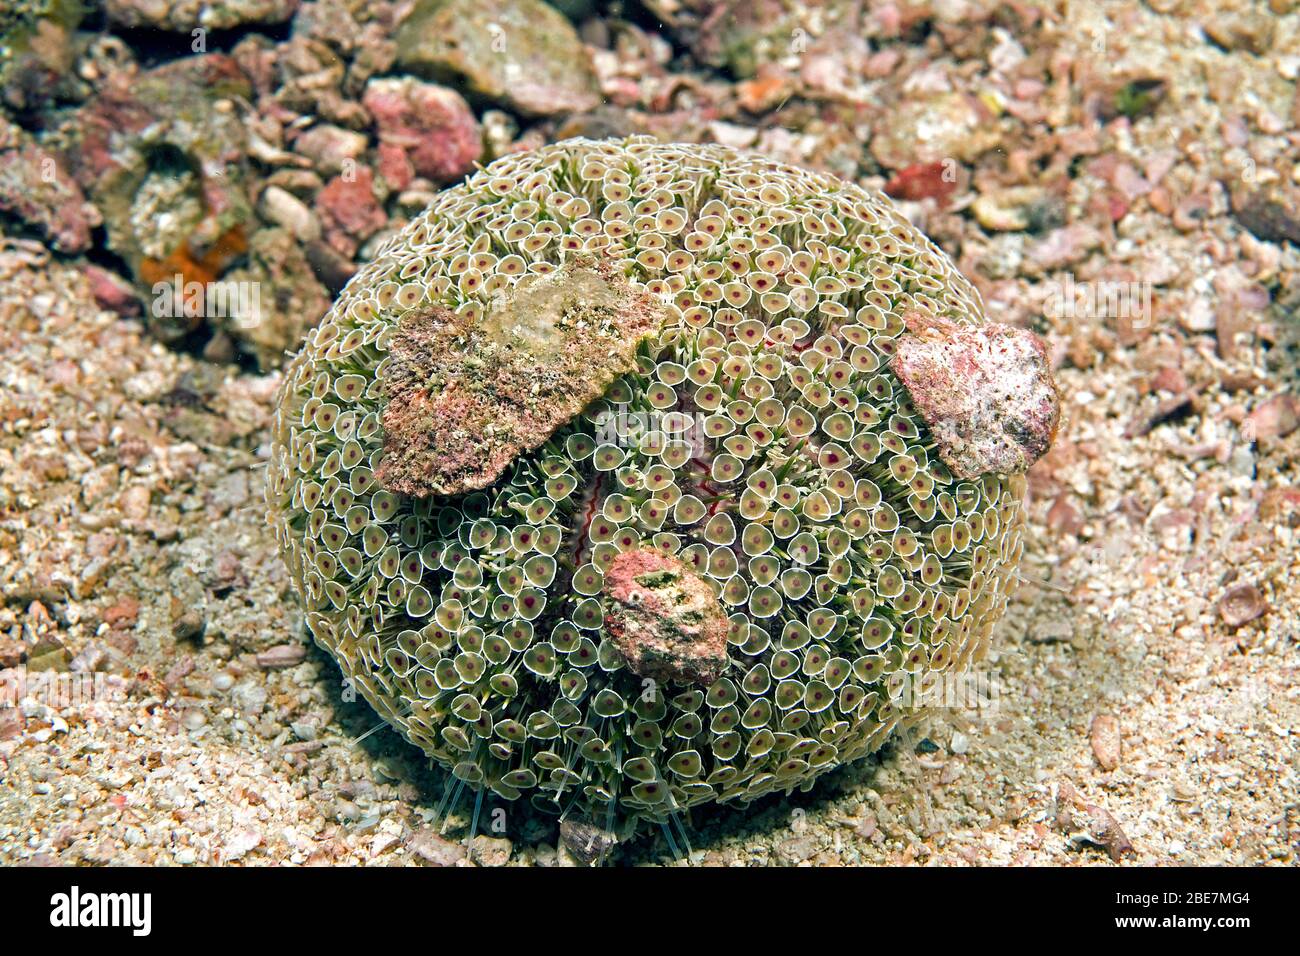 Flower urchin (Toxopneustes pileolus), this urchin is extremely venomous, Negros, Visayas, Philippines Stock Photo